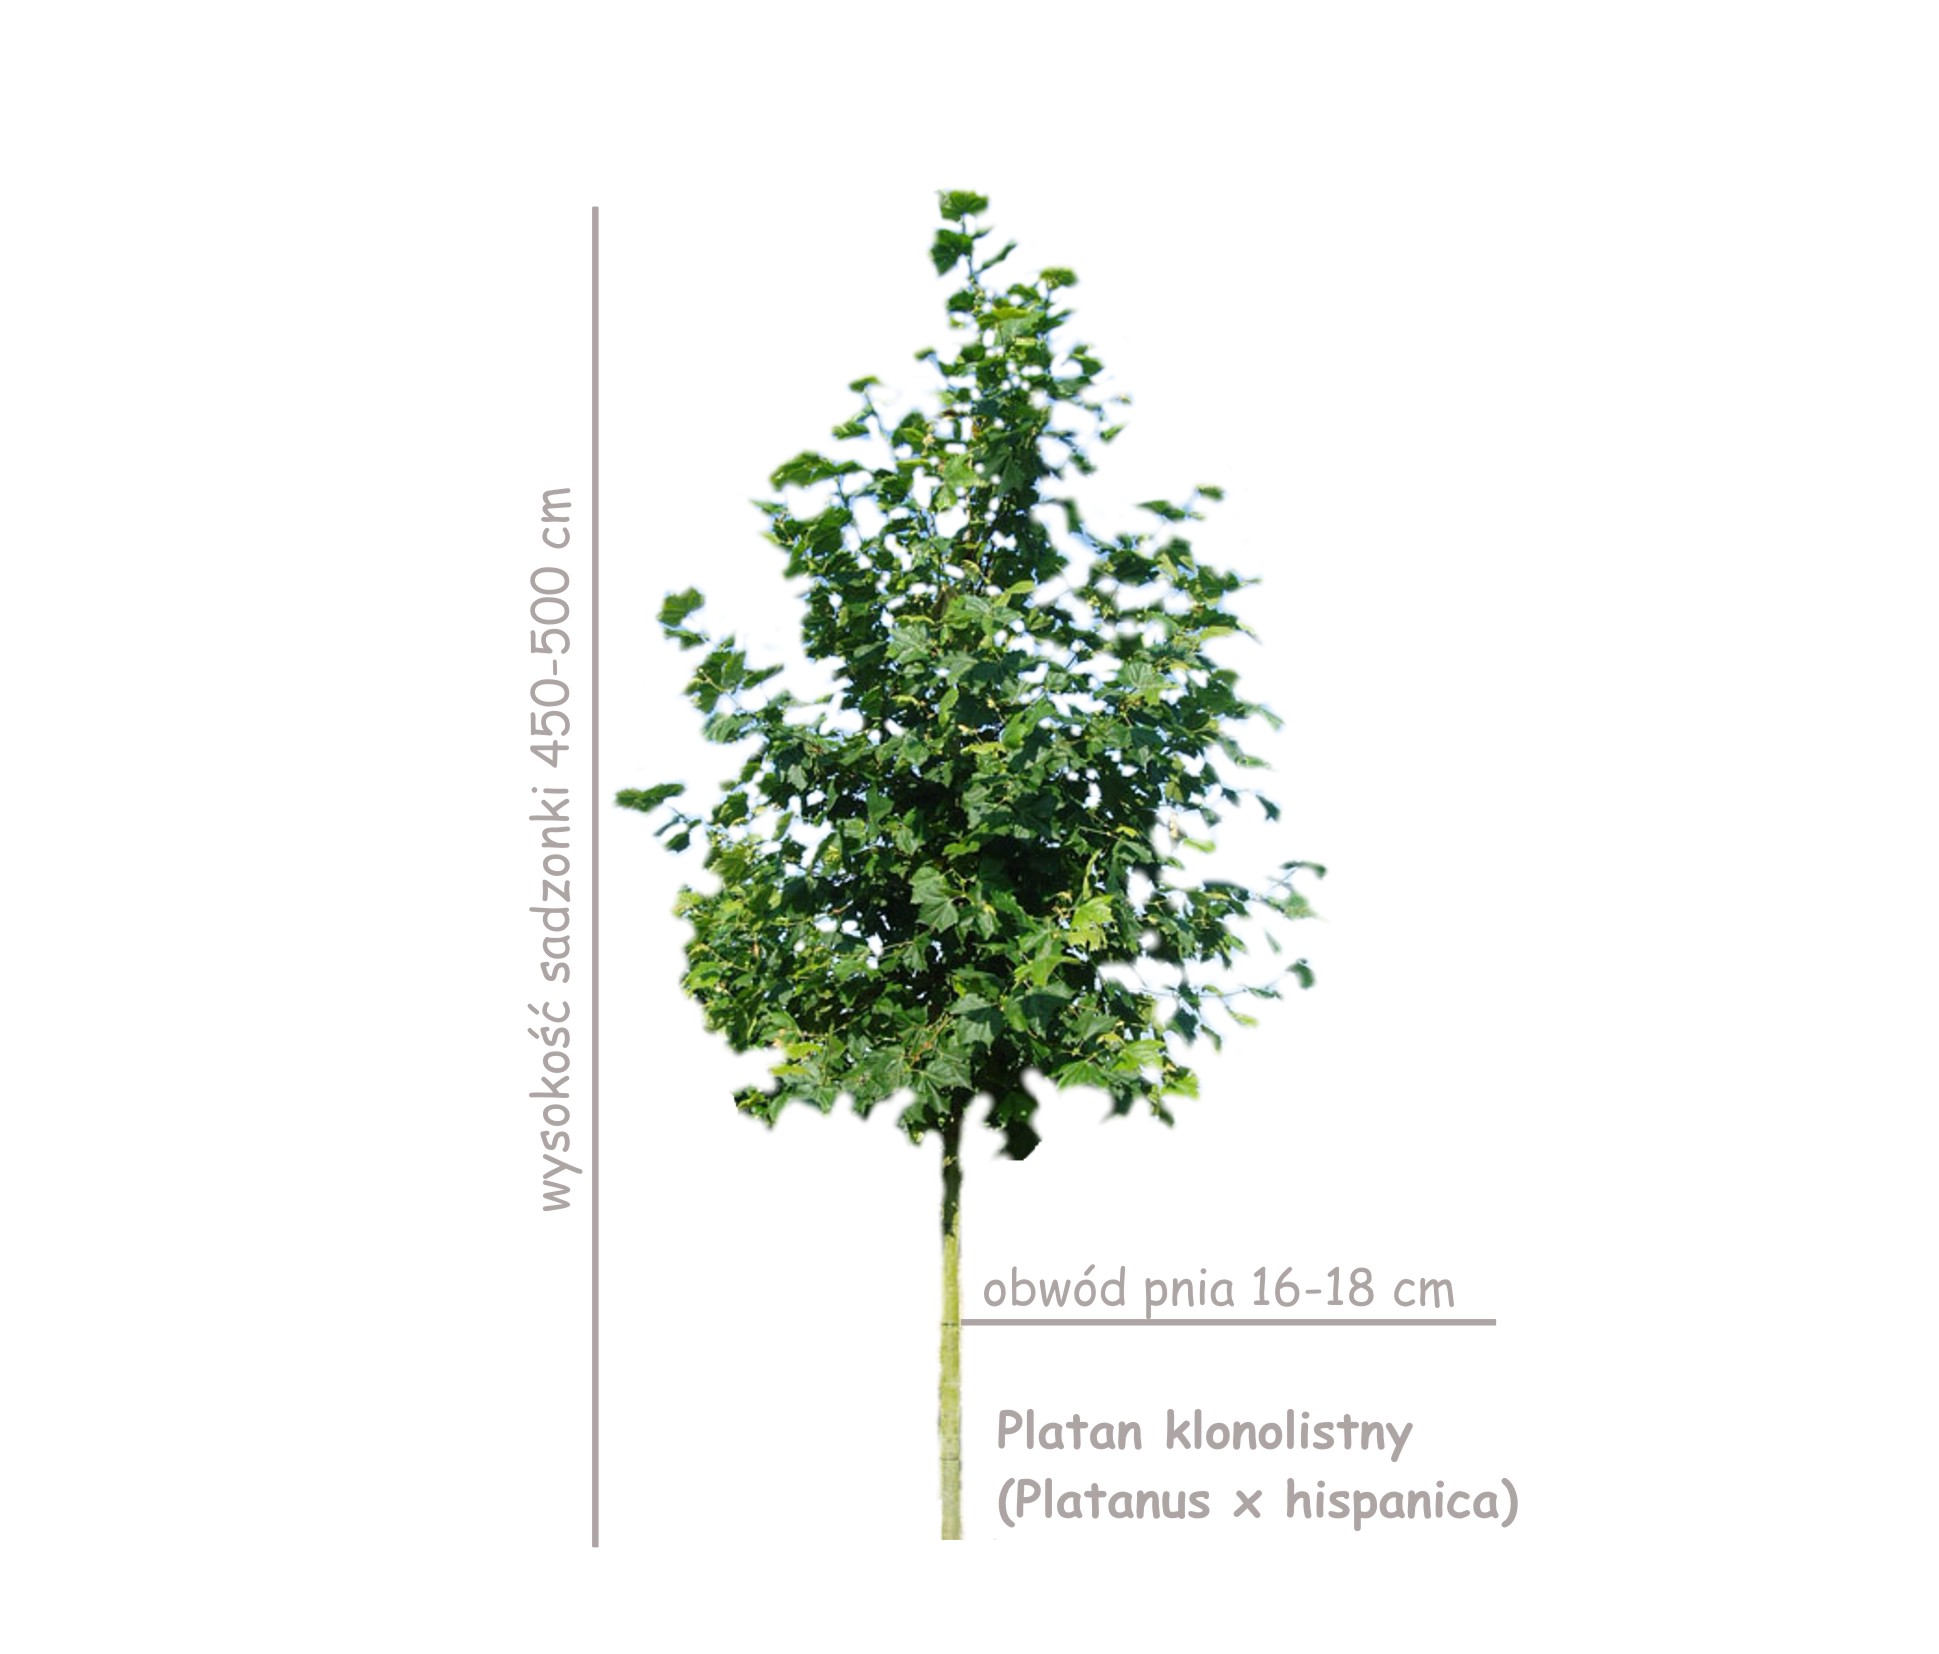 Platan klonolistny (Platanus x hispanica, acerifolia), sadzonka o obwodzie 16-18 cm